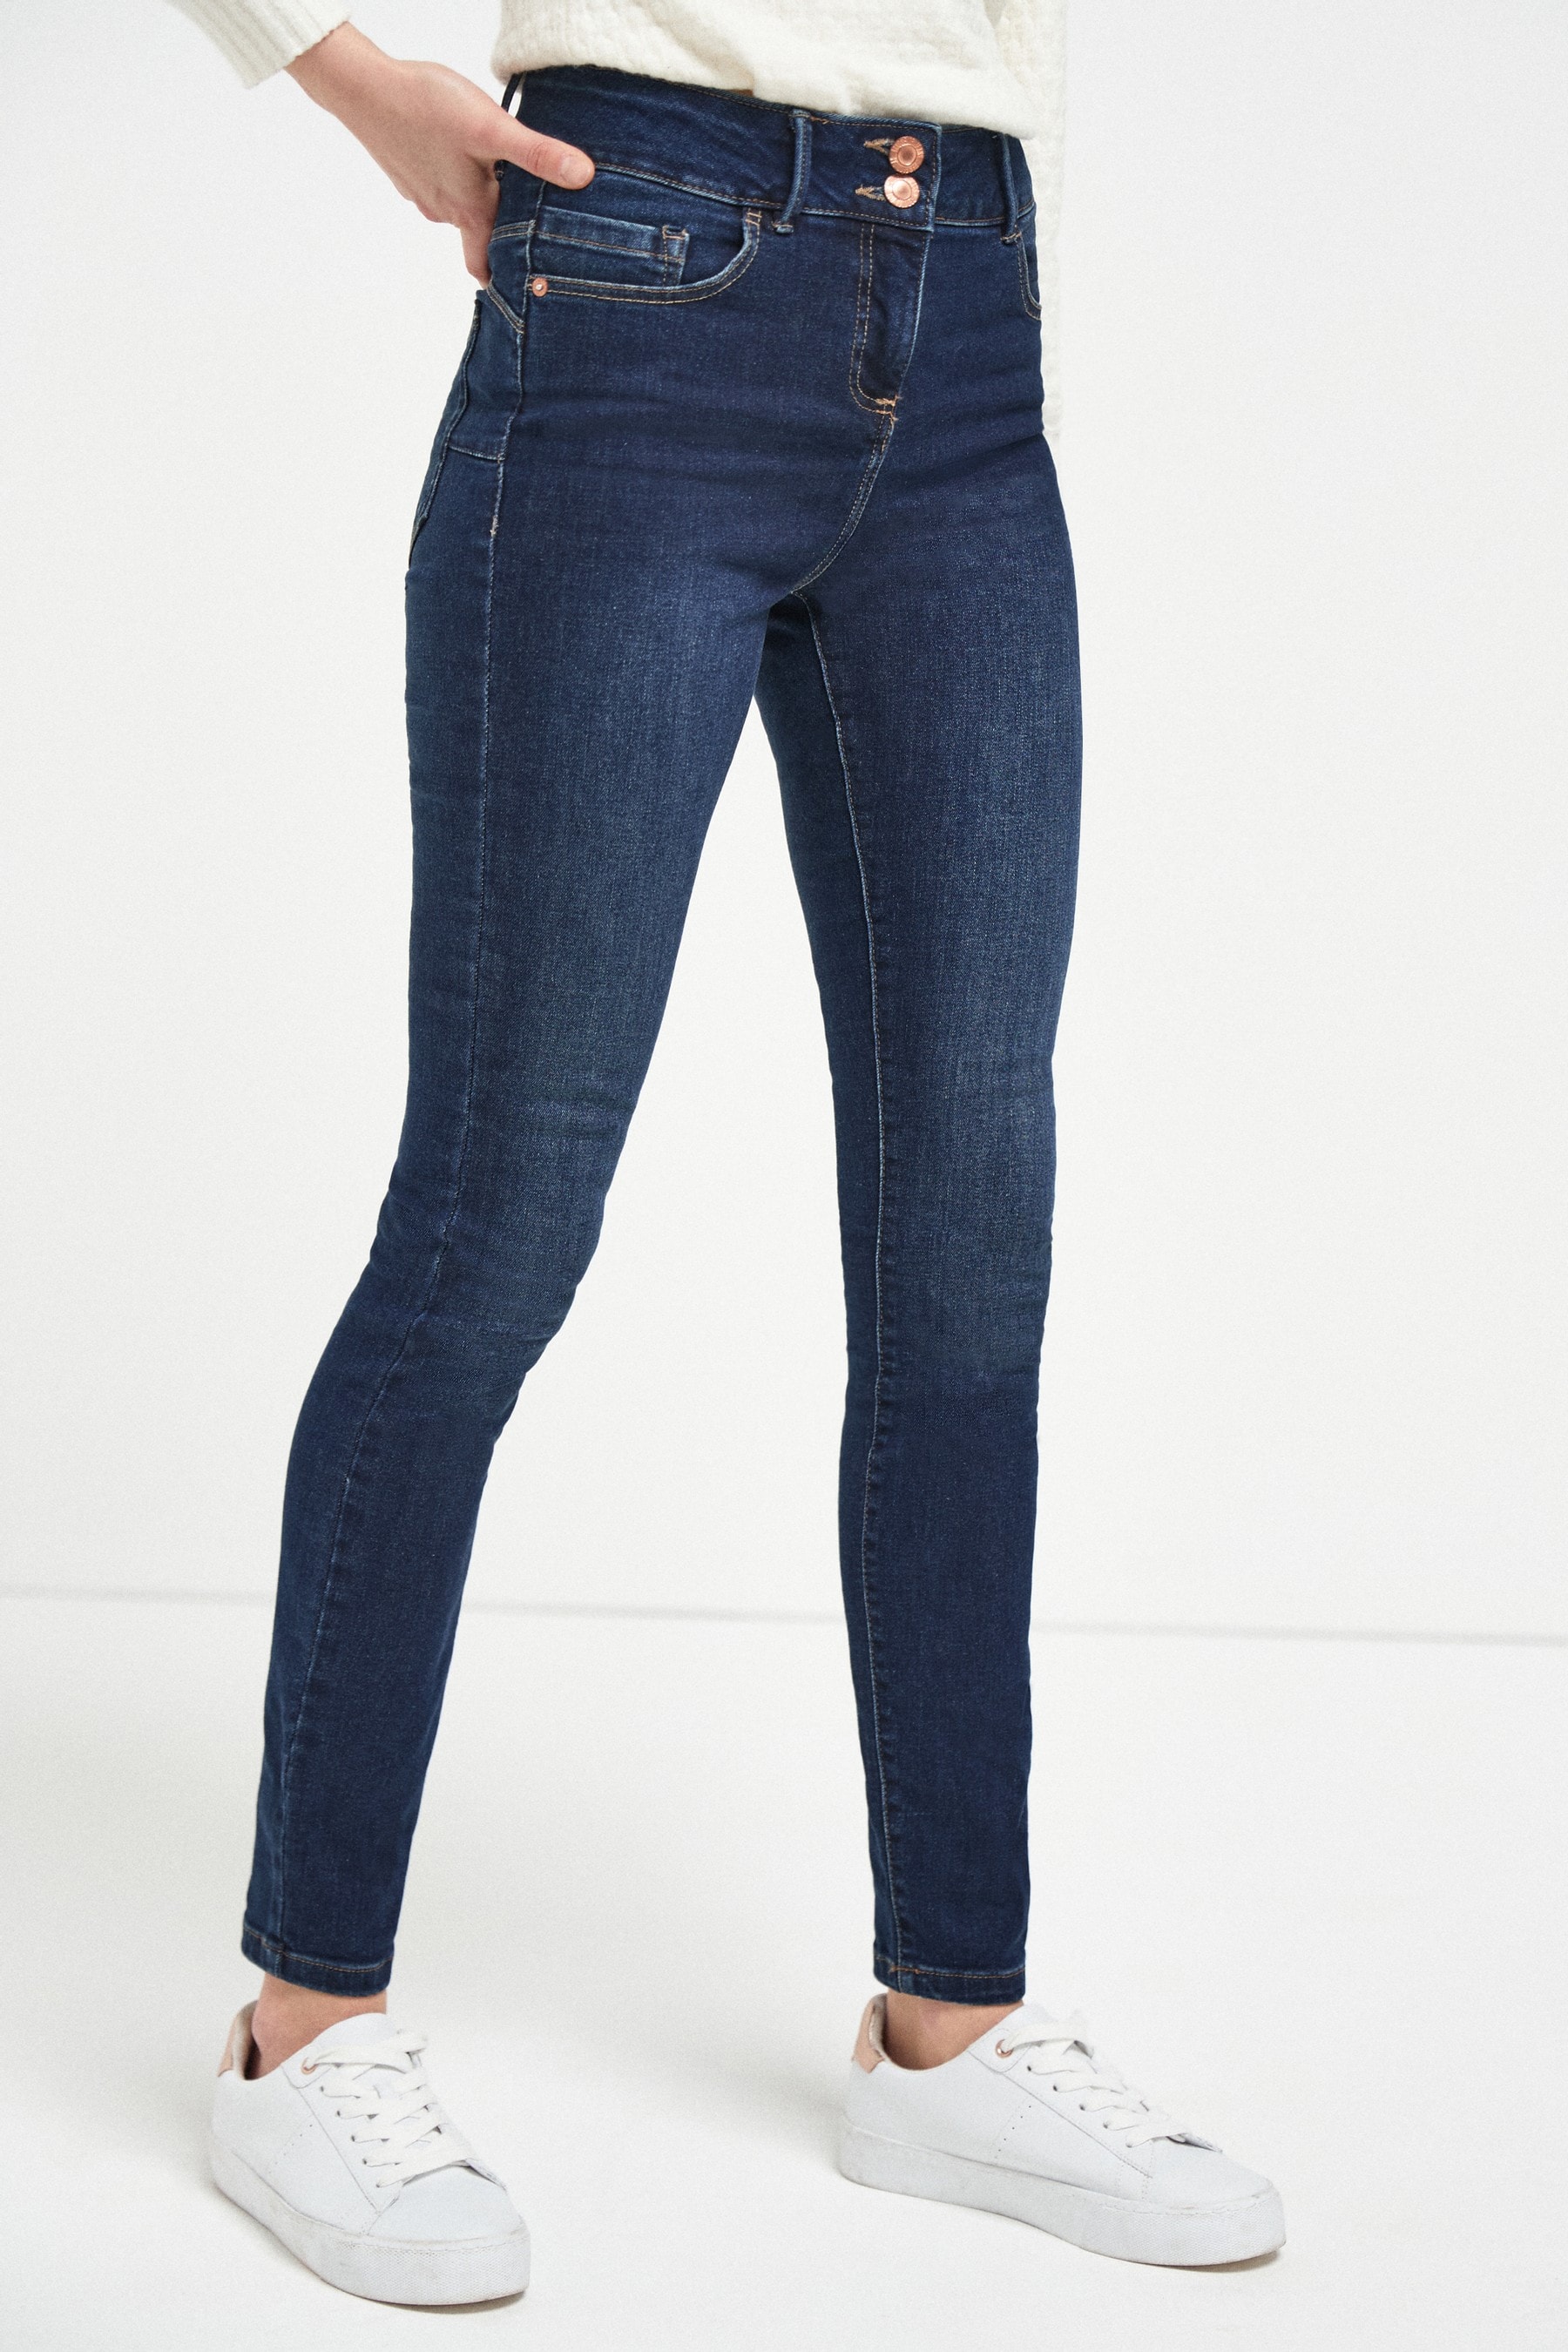 Buy Dark Blue Enhancer Skinny Jeans from the Next UK online shop